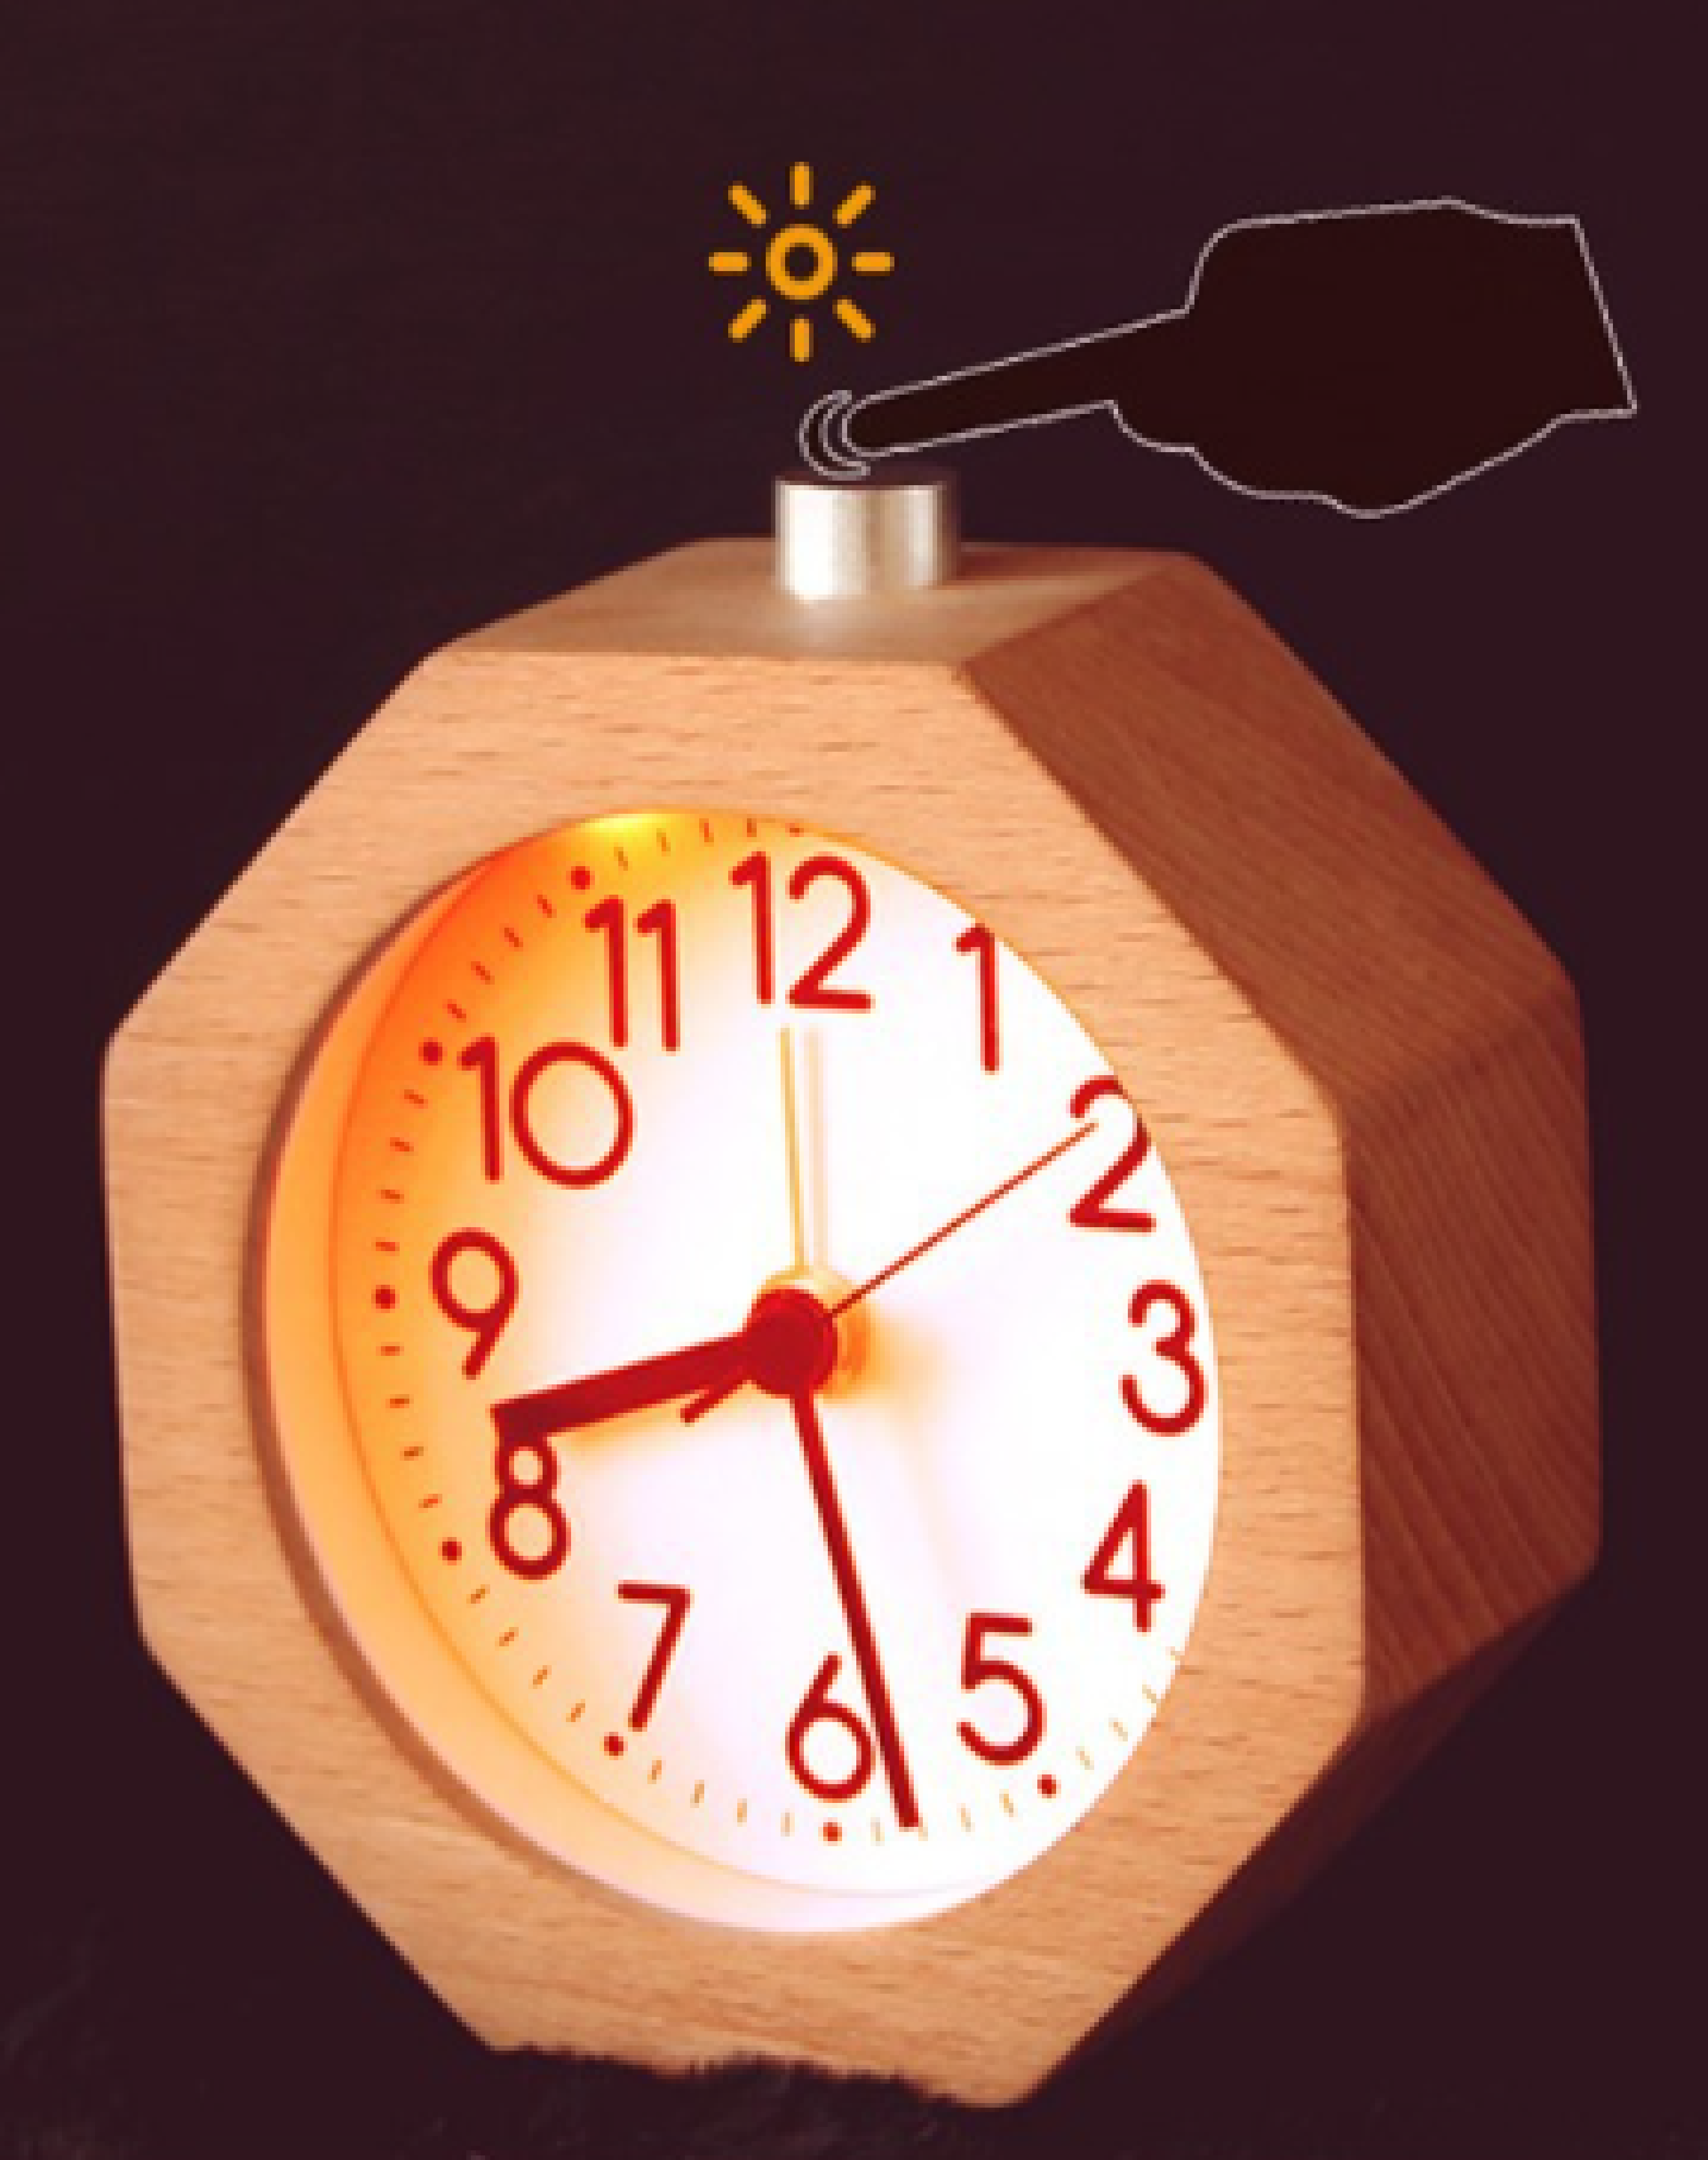  Octagonal solid wood clock, student sleepiness, lazy man alarm clock